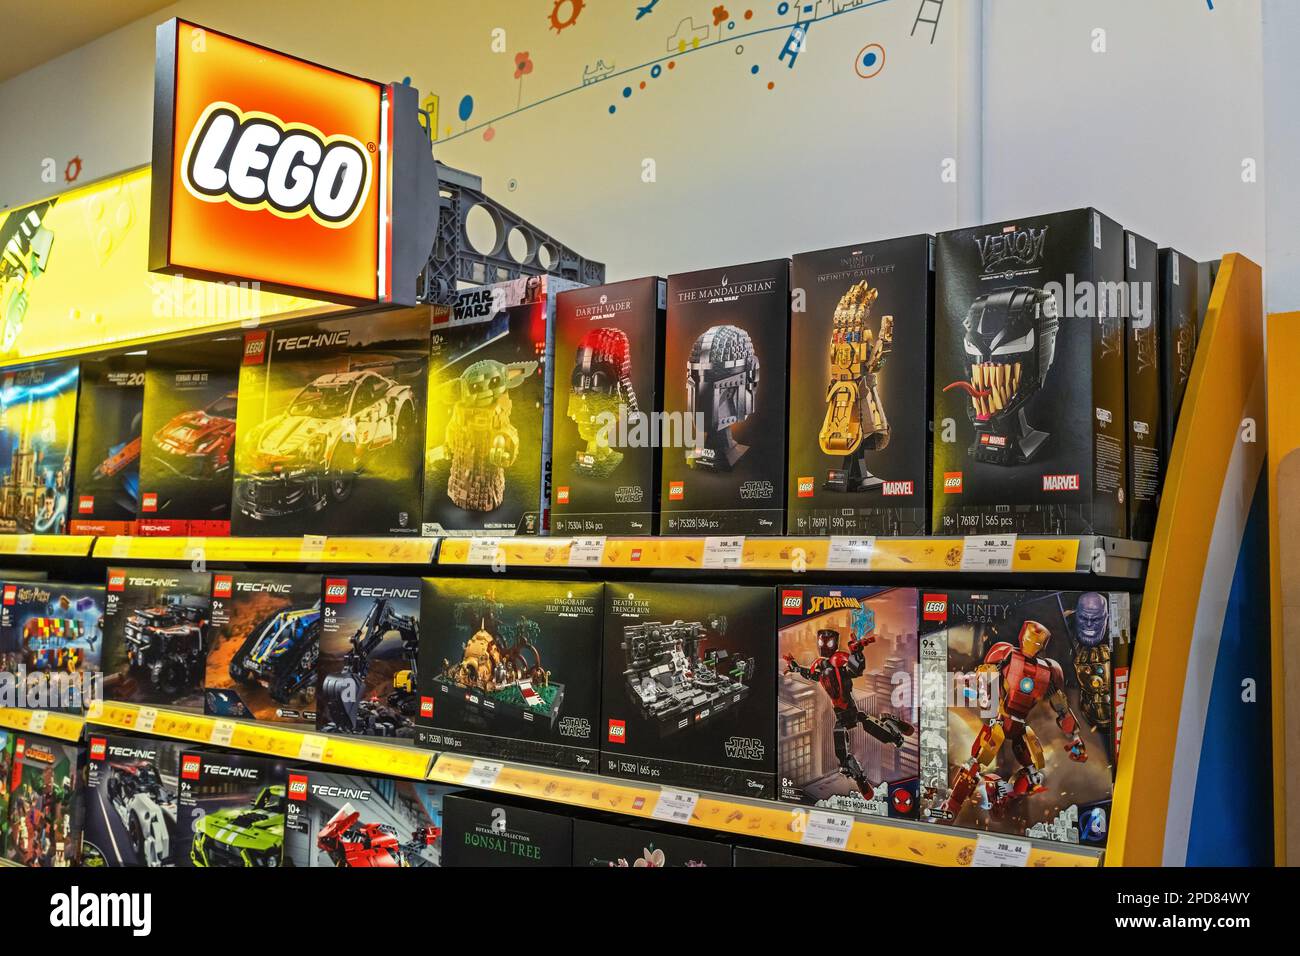 Lego box on the shop display for sale, Lego Star Wars, Speed, Super Heroes,  City, Juniors, Classic, Duplo, Creator, Technic, Friends, Ninjago, Elves  Stock Photo - Alamy